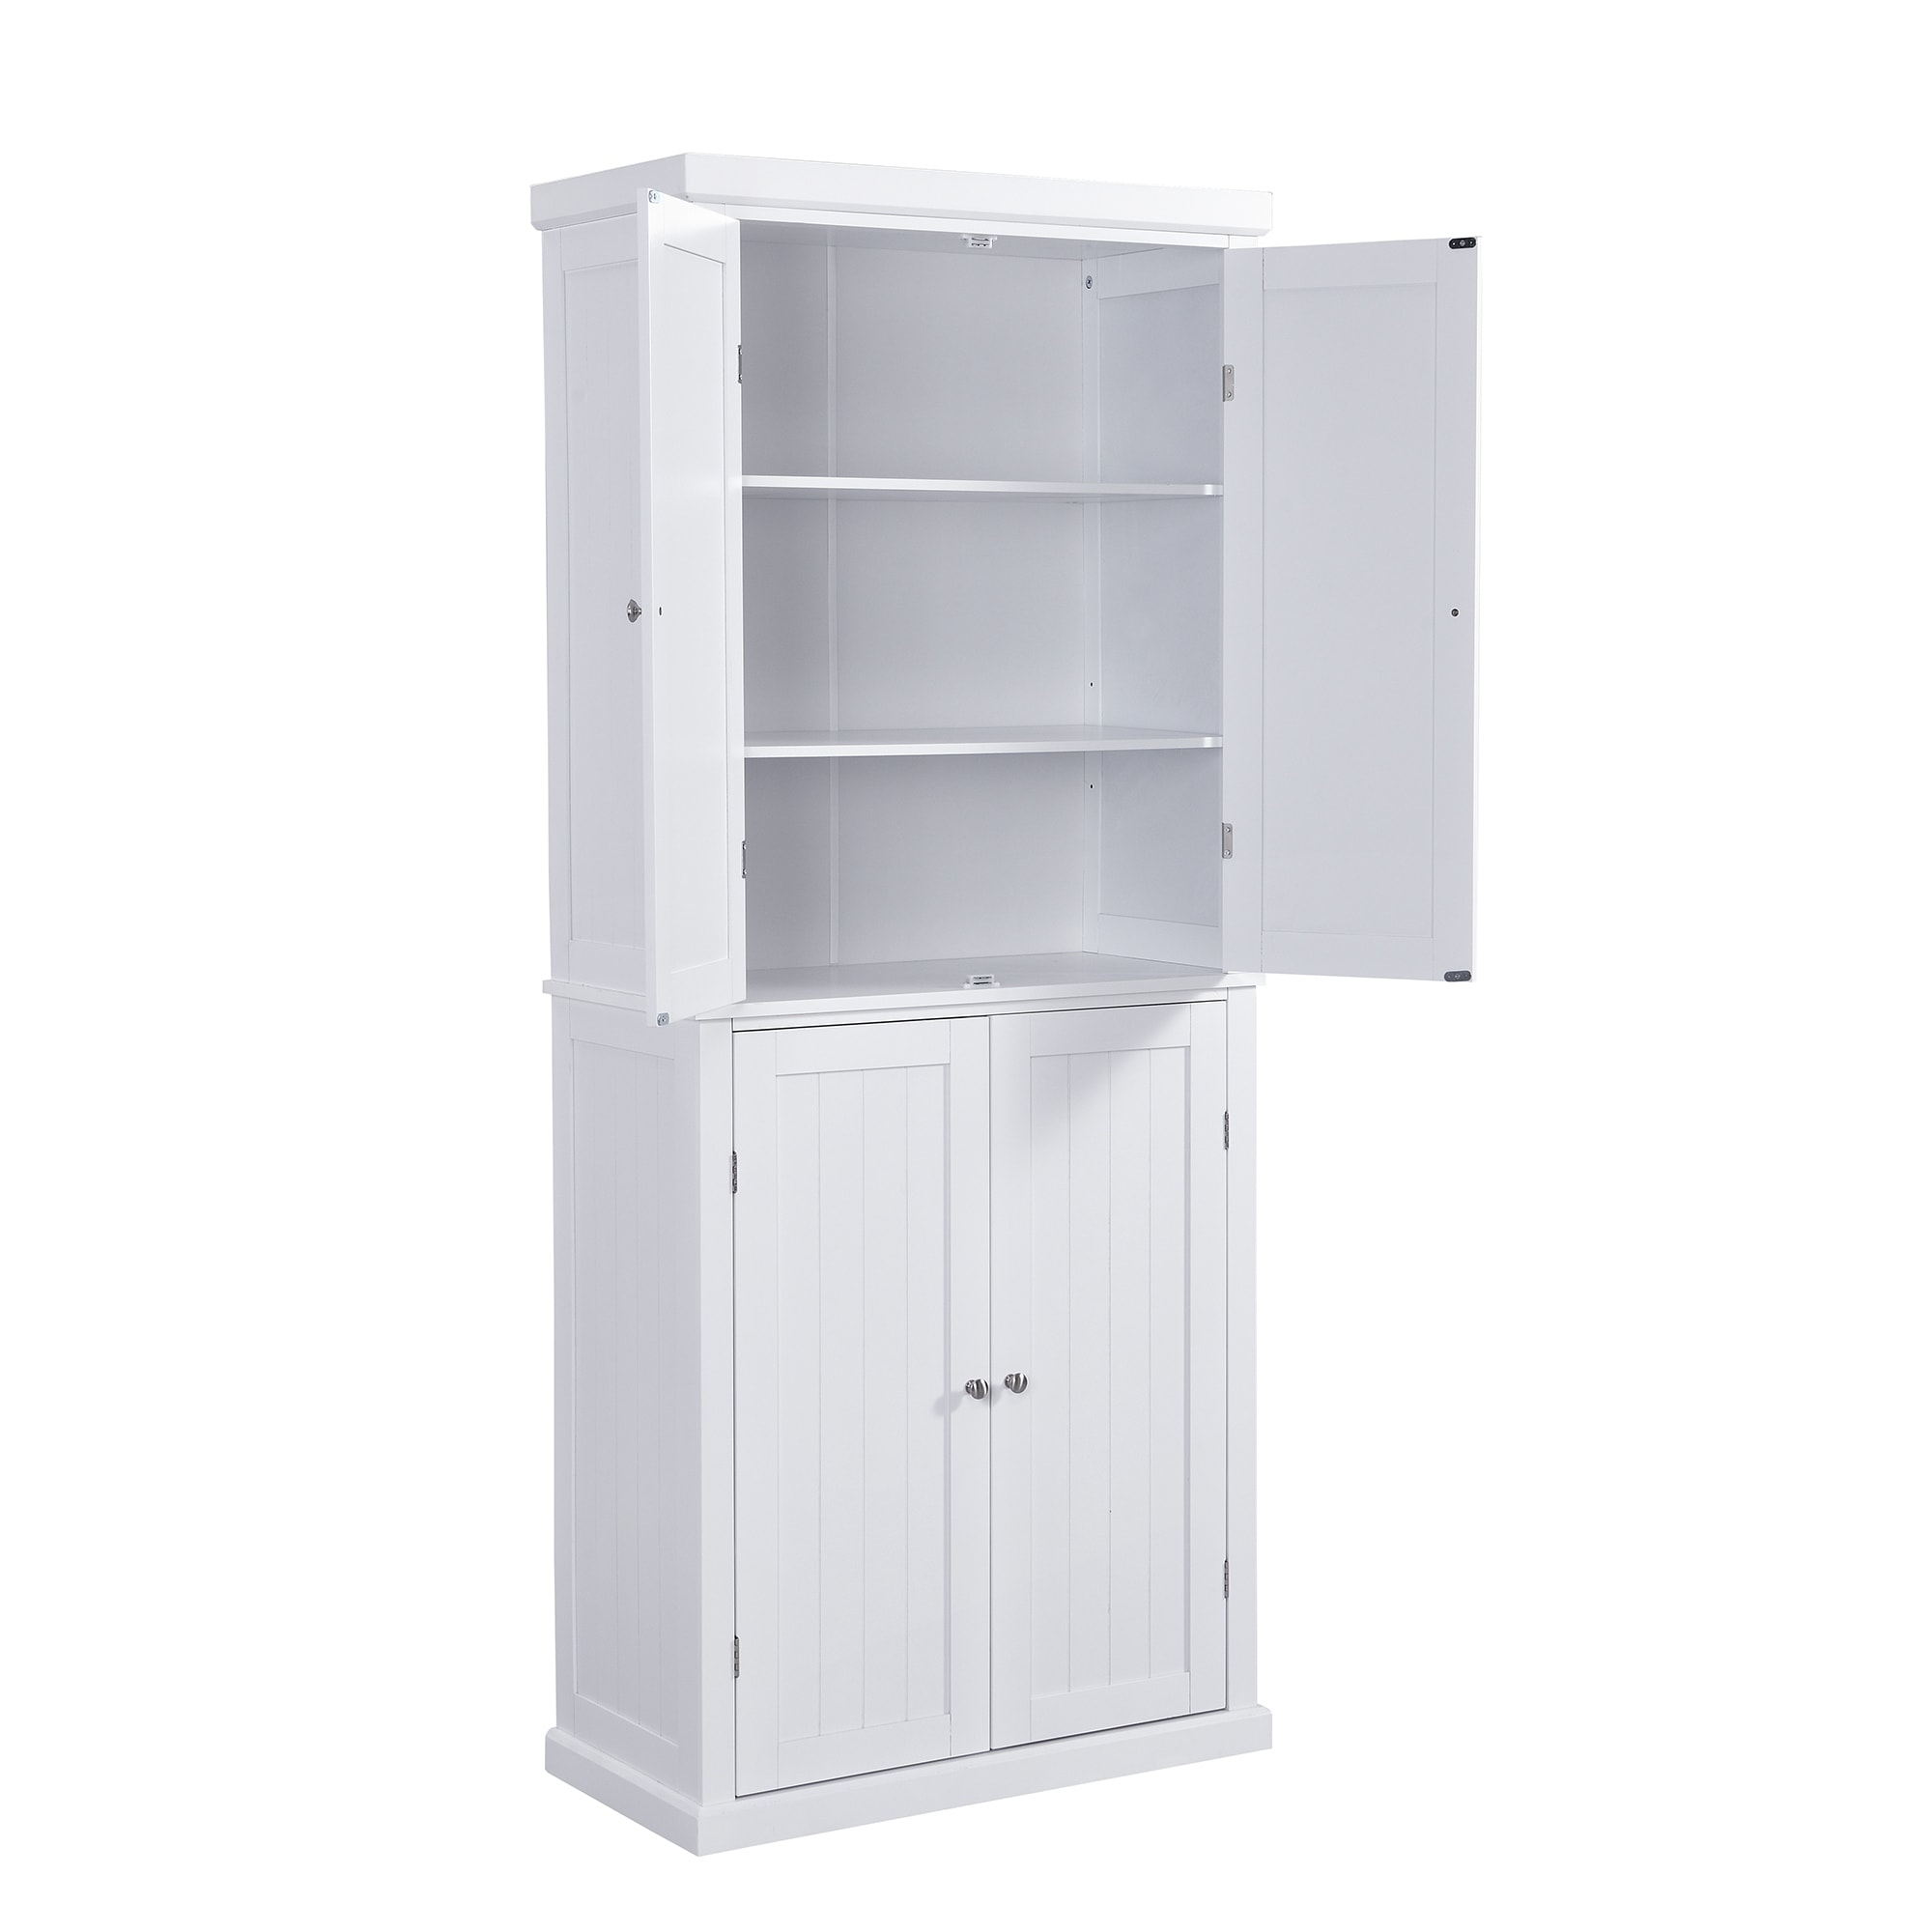 4-Door Kitchen Pantry Cabinet 72 Tall Cupboard Organizer Adjustable  Shelves